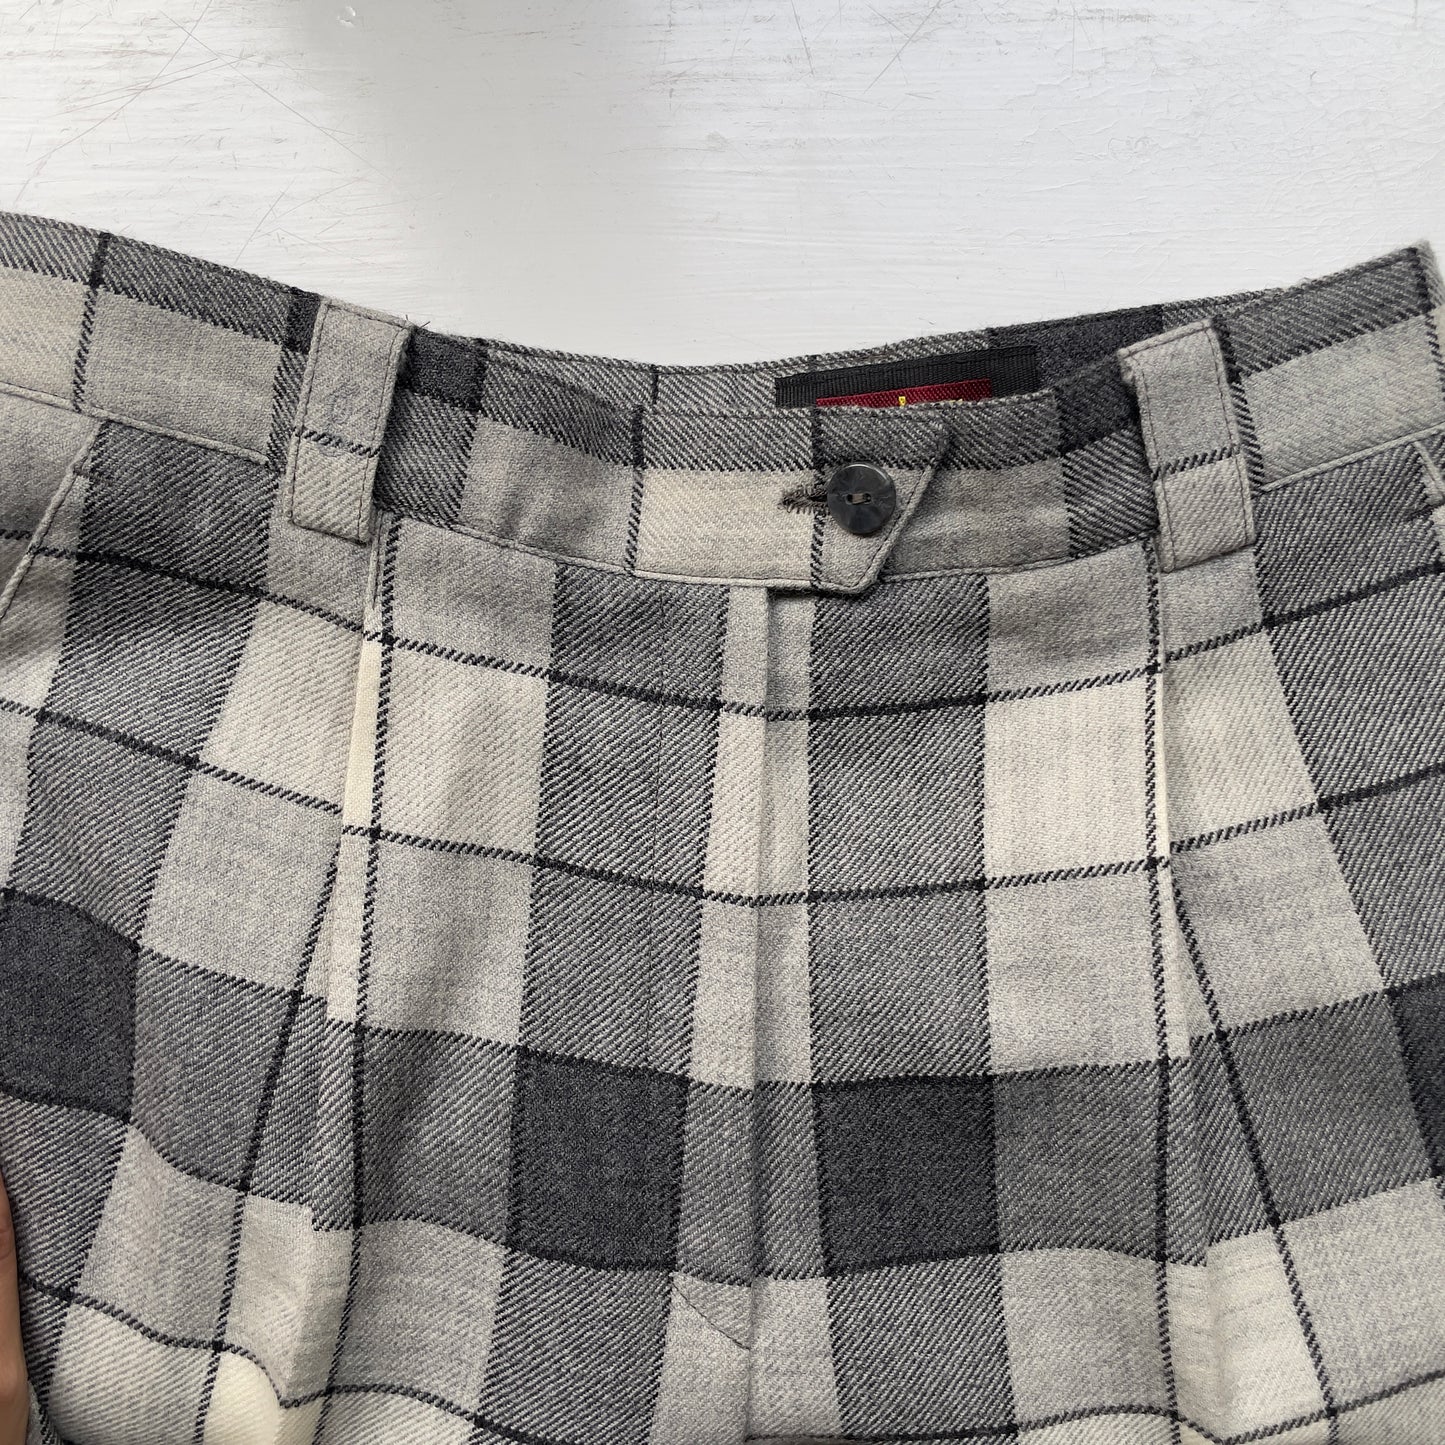 Gray Checkered Plaid Pants